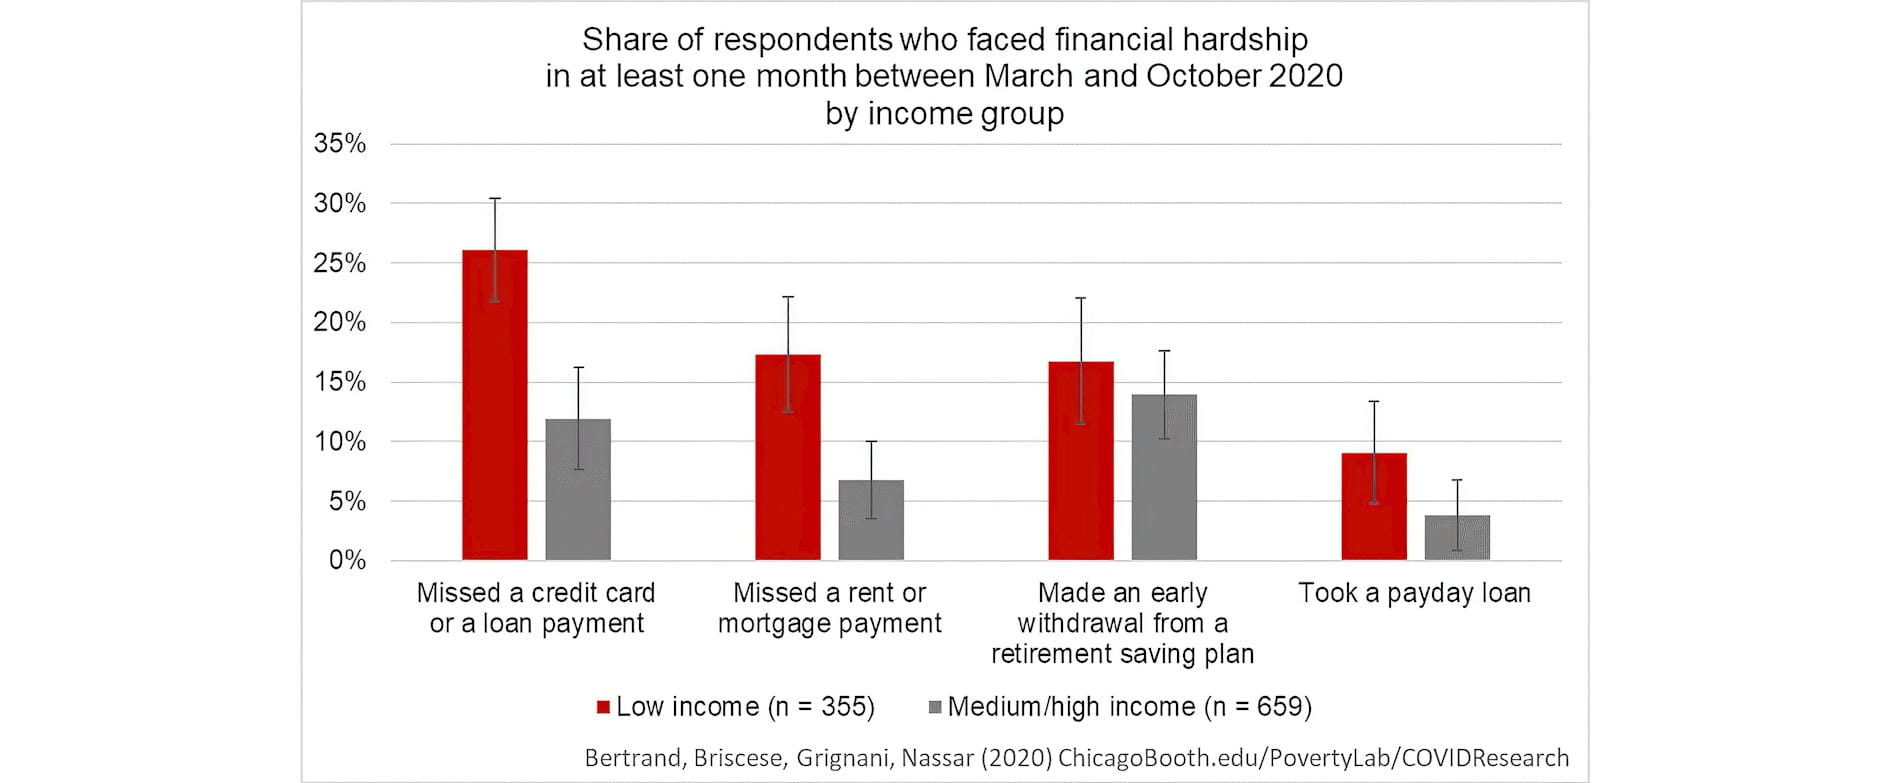 Bar graph showing financial income shocks due to coronavirus based on income